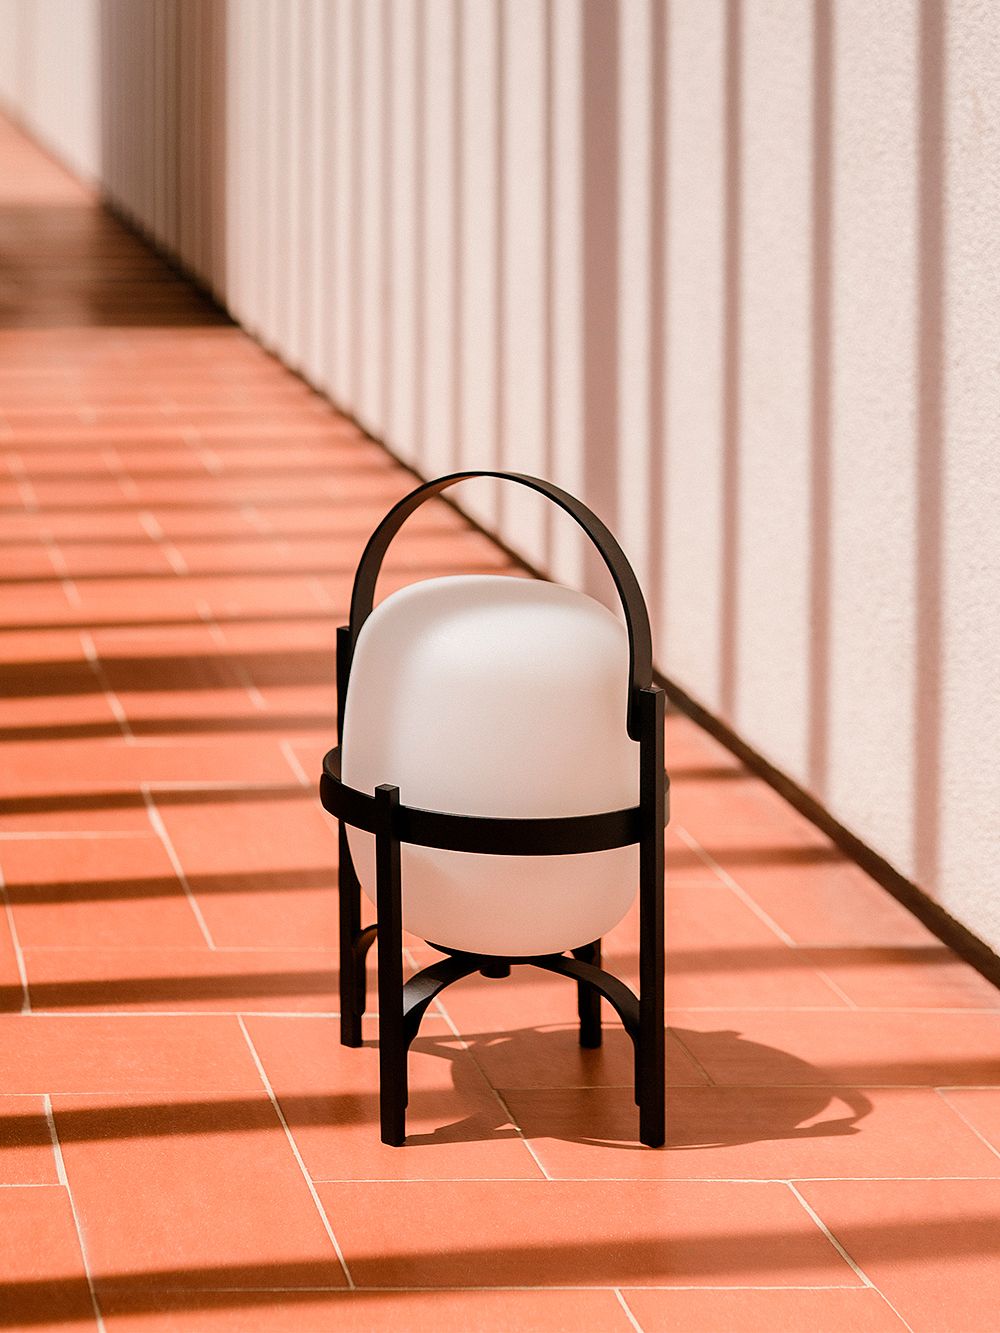 A product image of Santa & Cole's Cestita Alubat table lamp set on the floor.